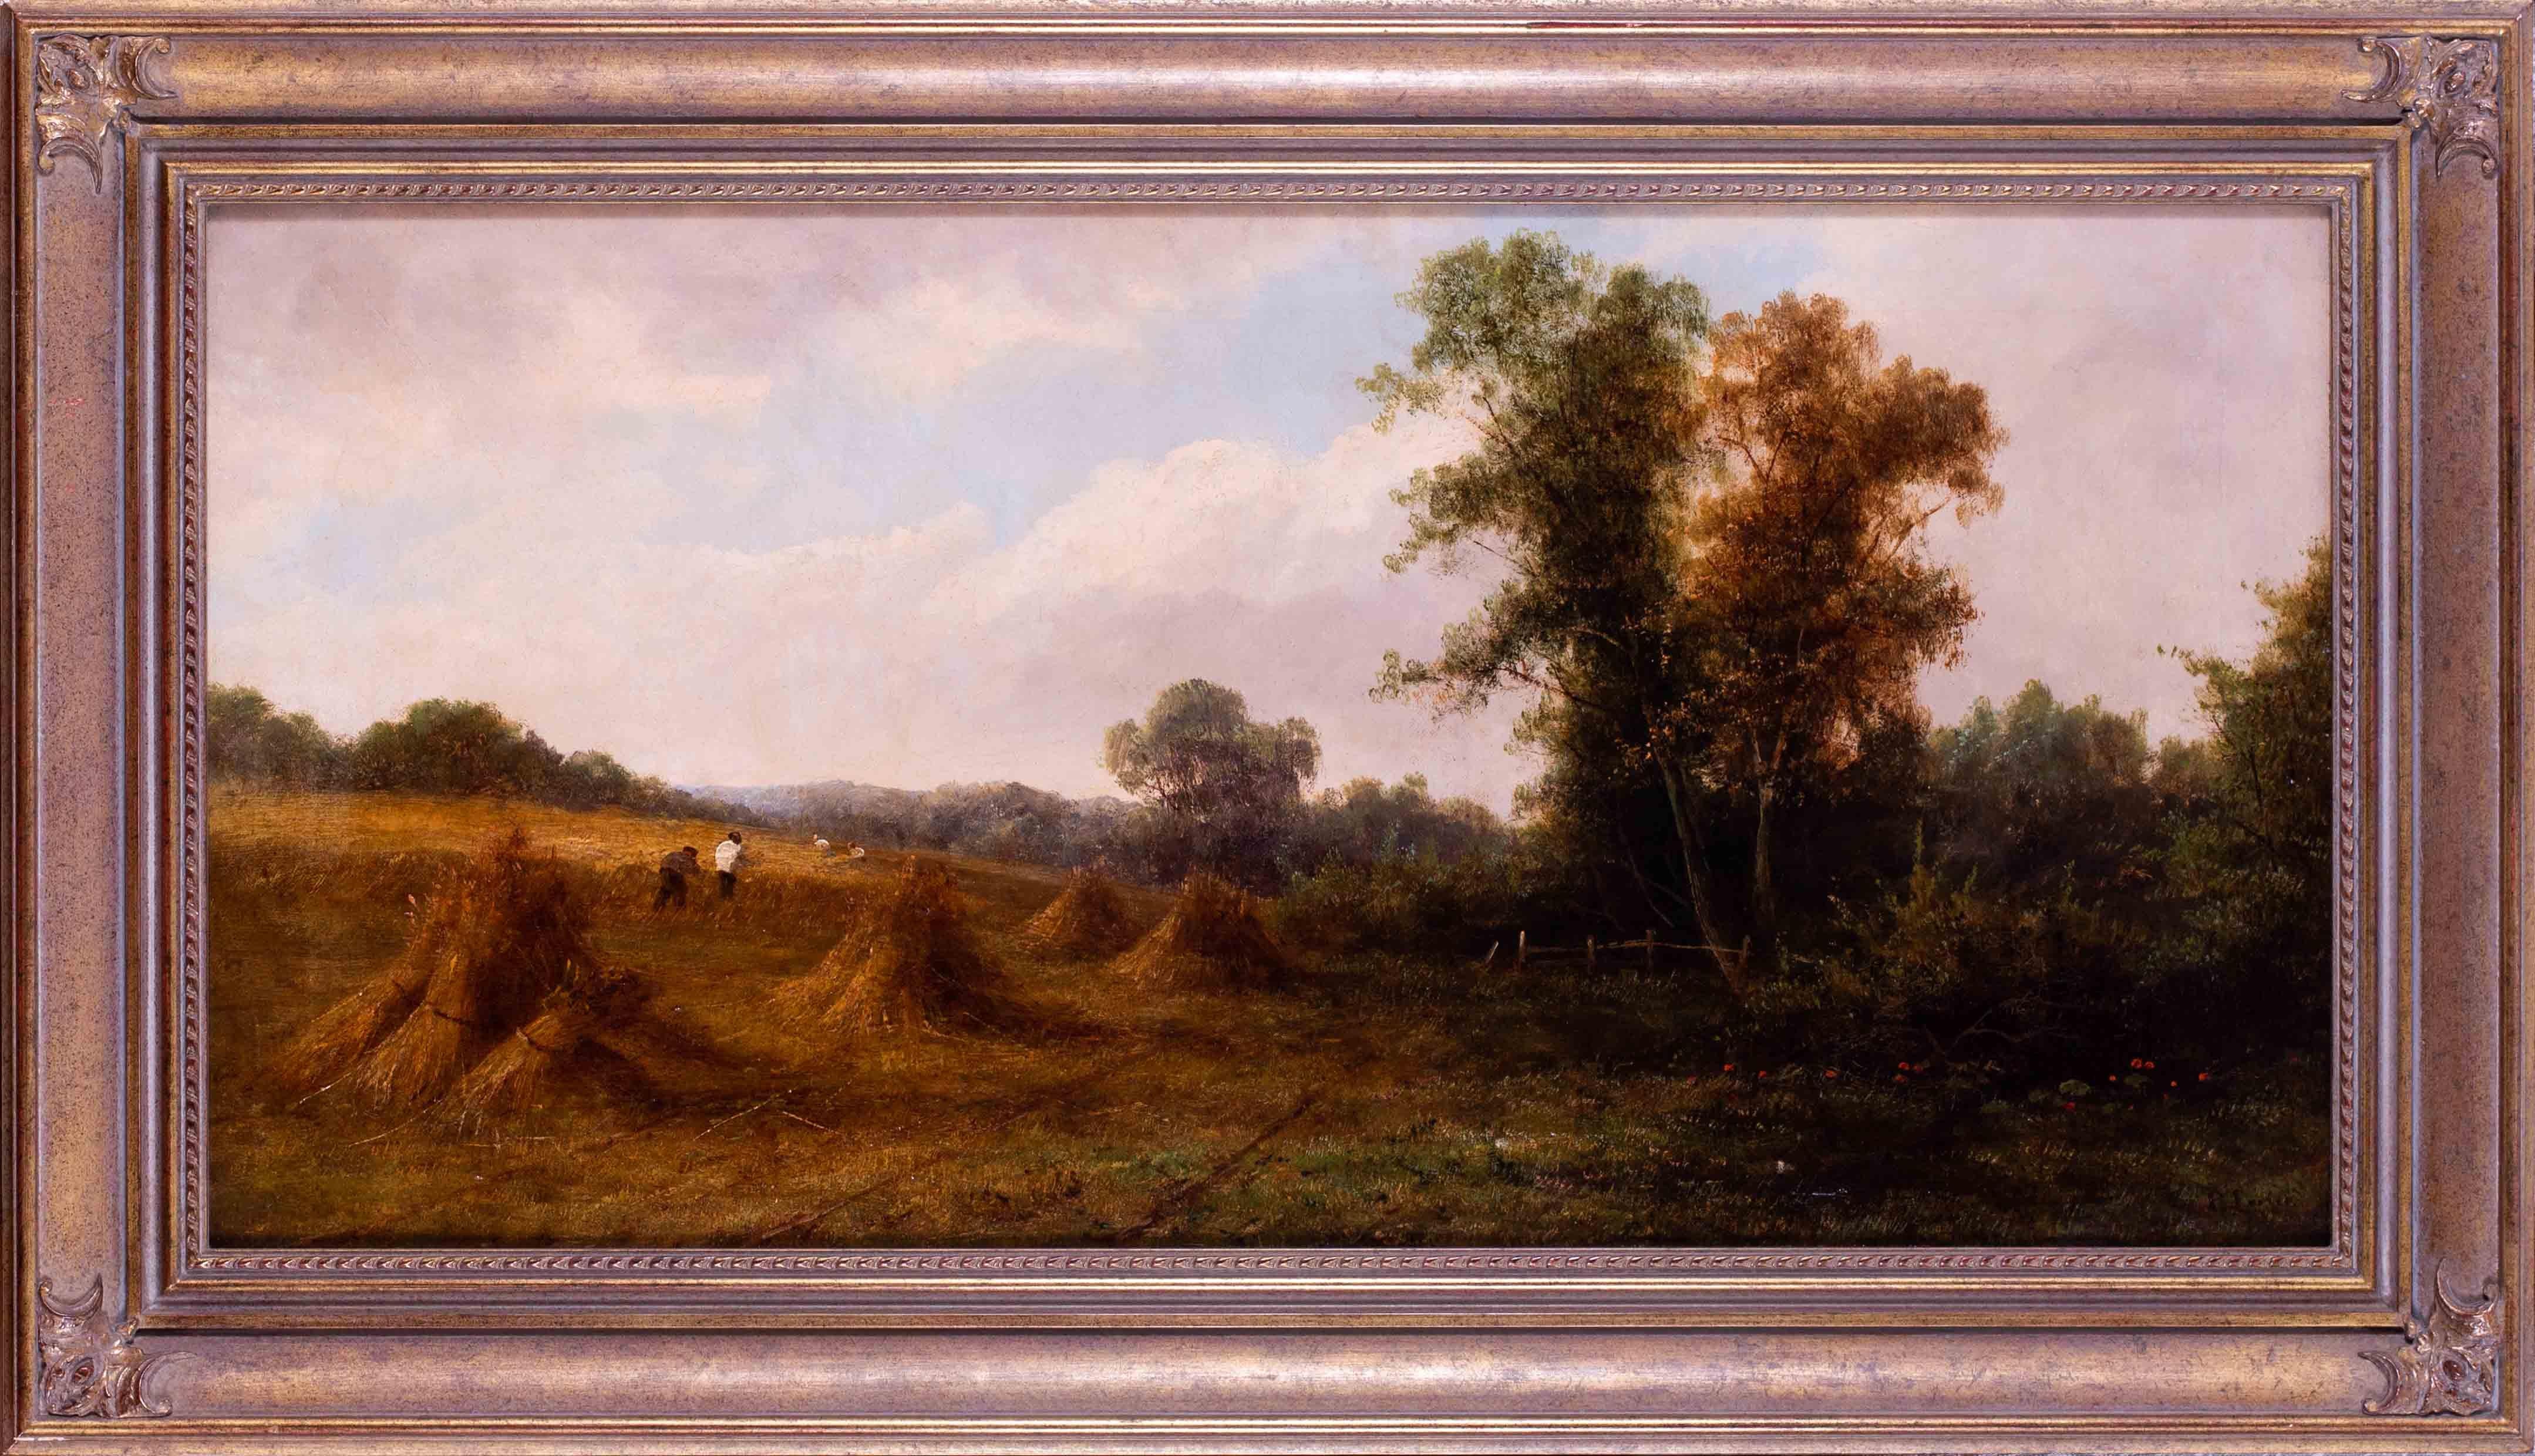 19th Century British harvest scene oil on canvas, by David Leslie